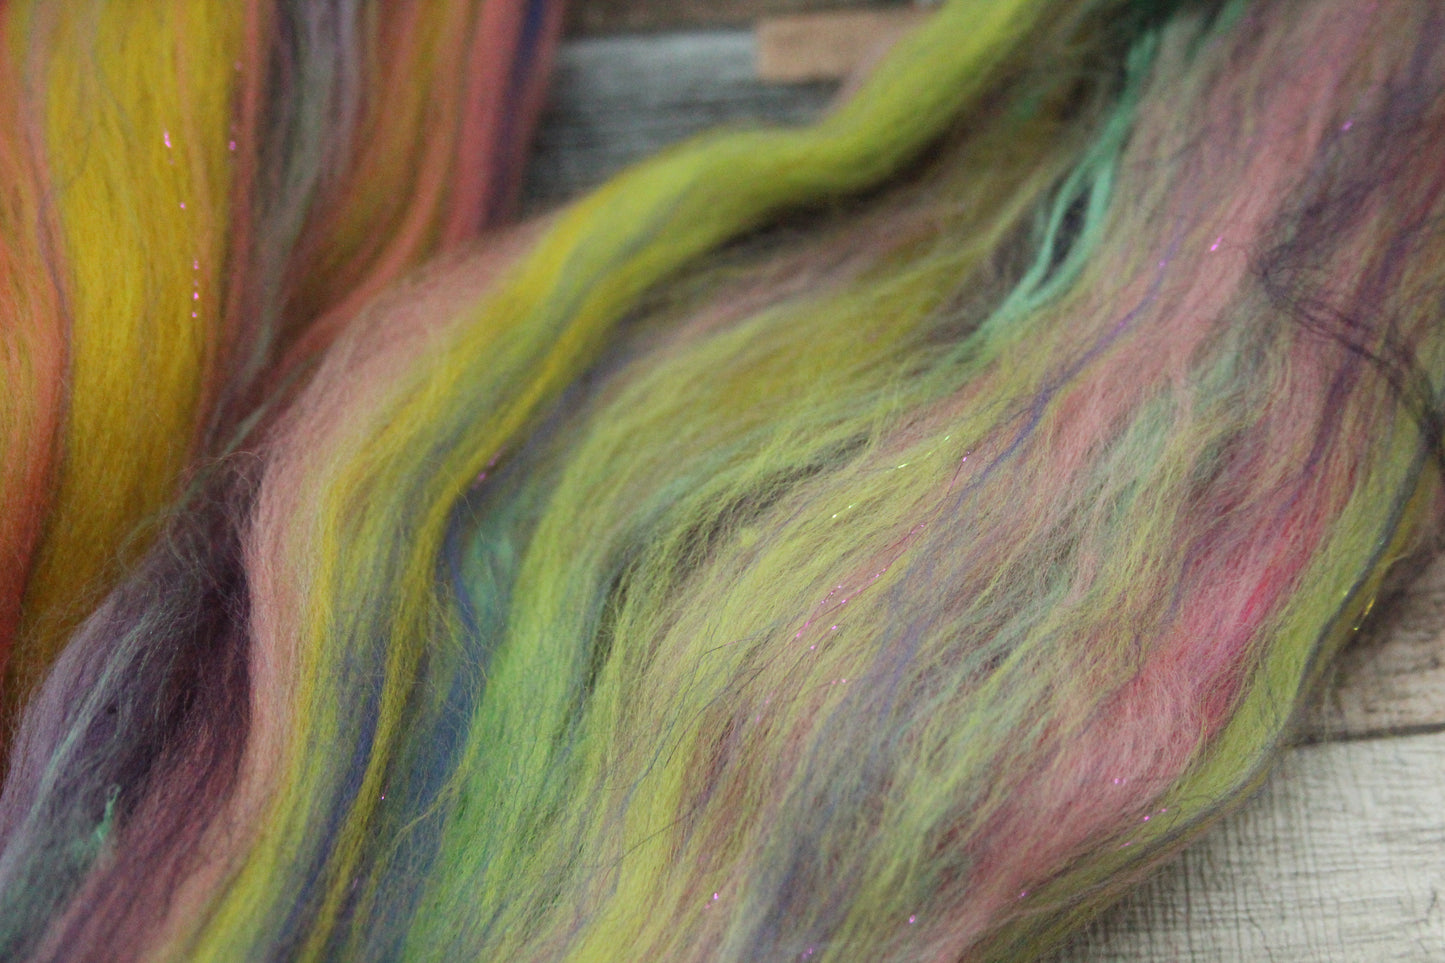 Merino Wool Blend - Pink Yellow Purple Green - 24 grams / 0.8 oz  - Fibre for felting, weaving or spinning